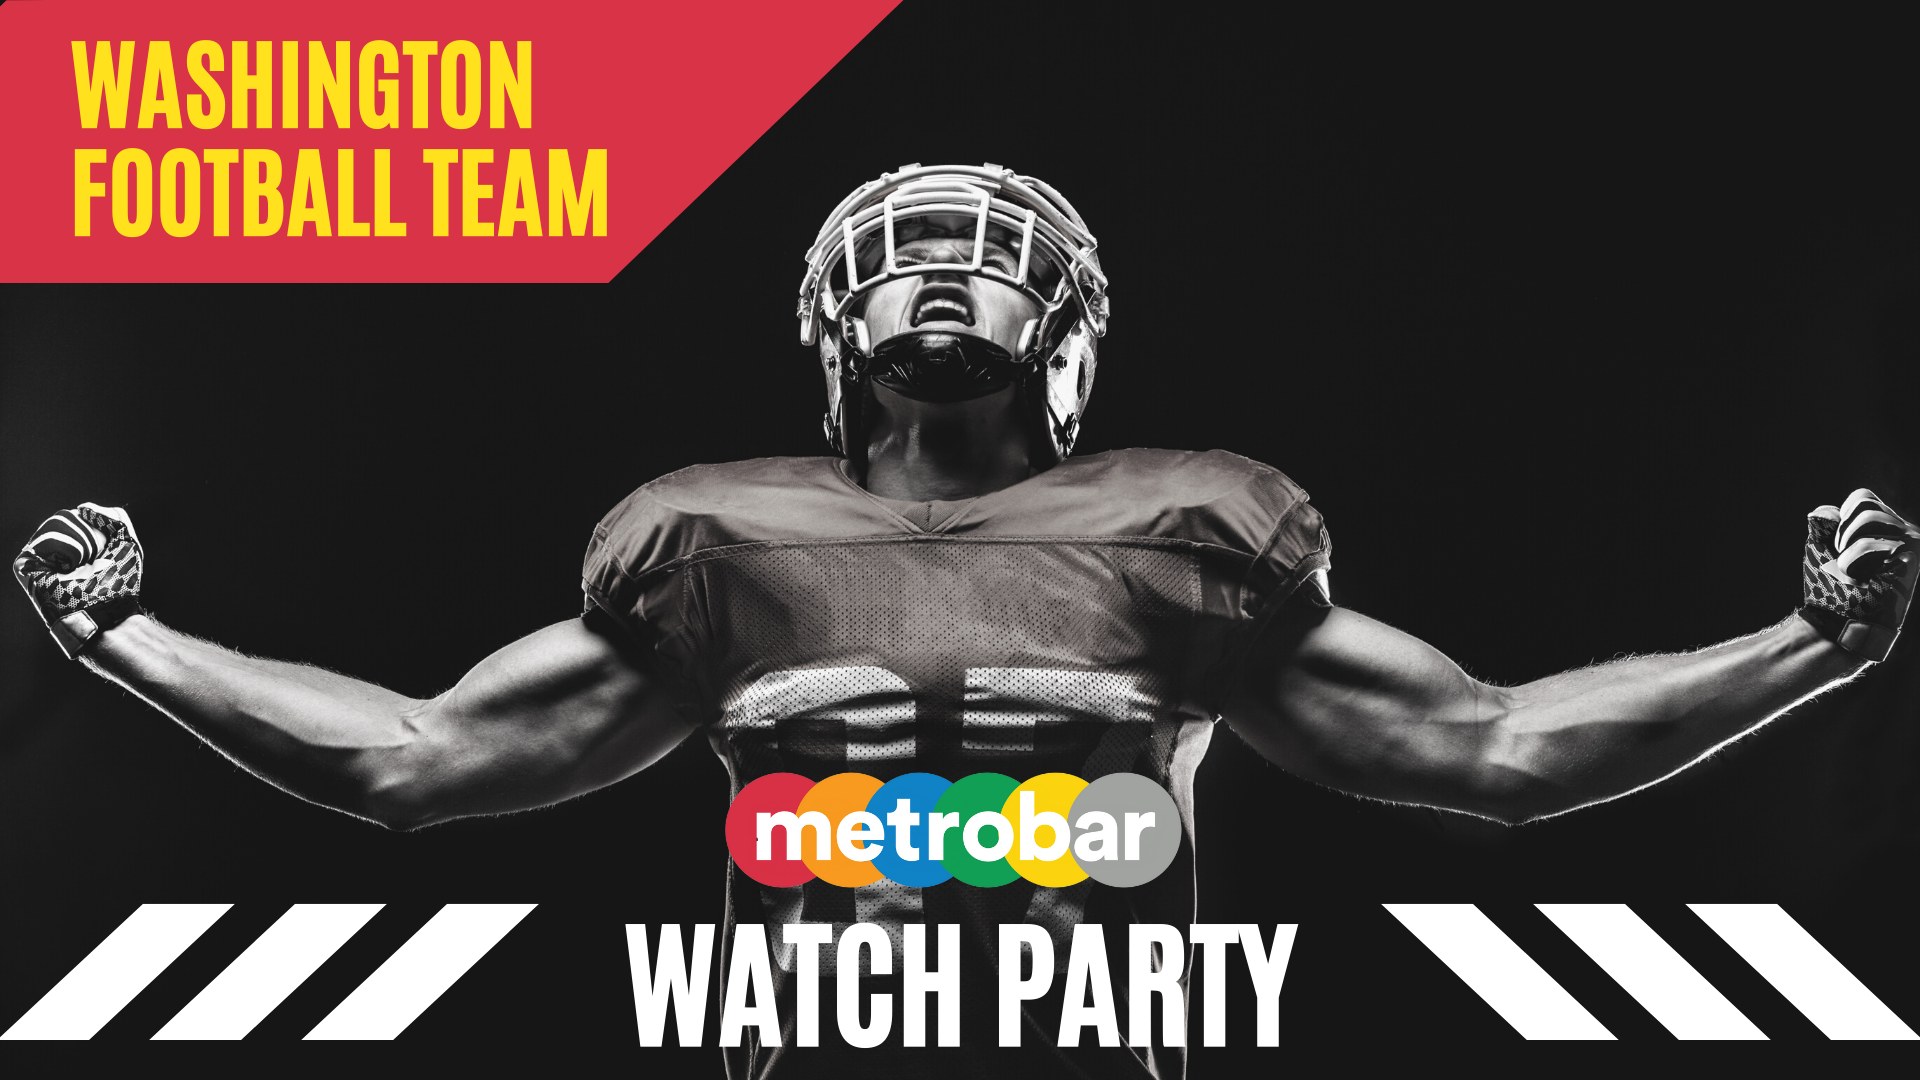 Washington Football Team Watch Party